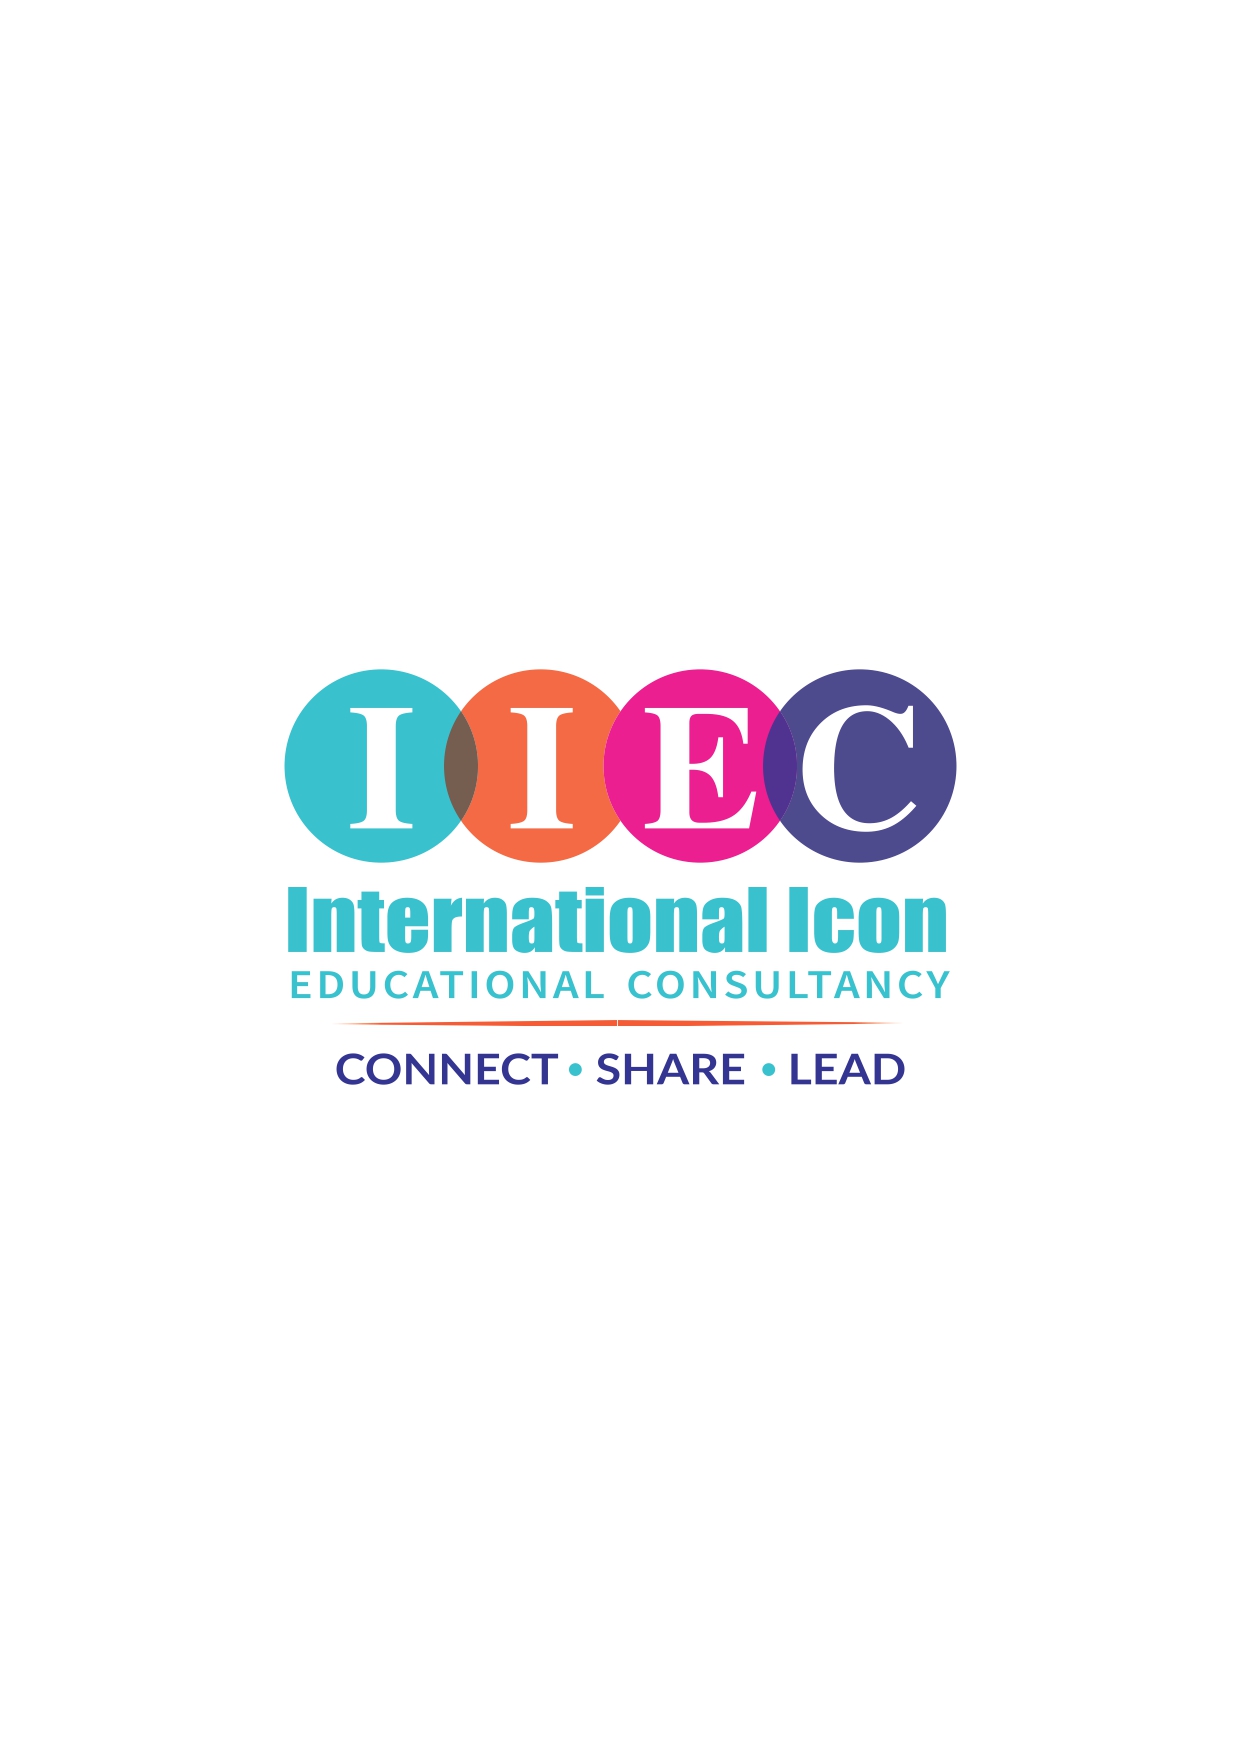 International Icon Educational Consultancy